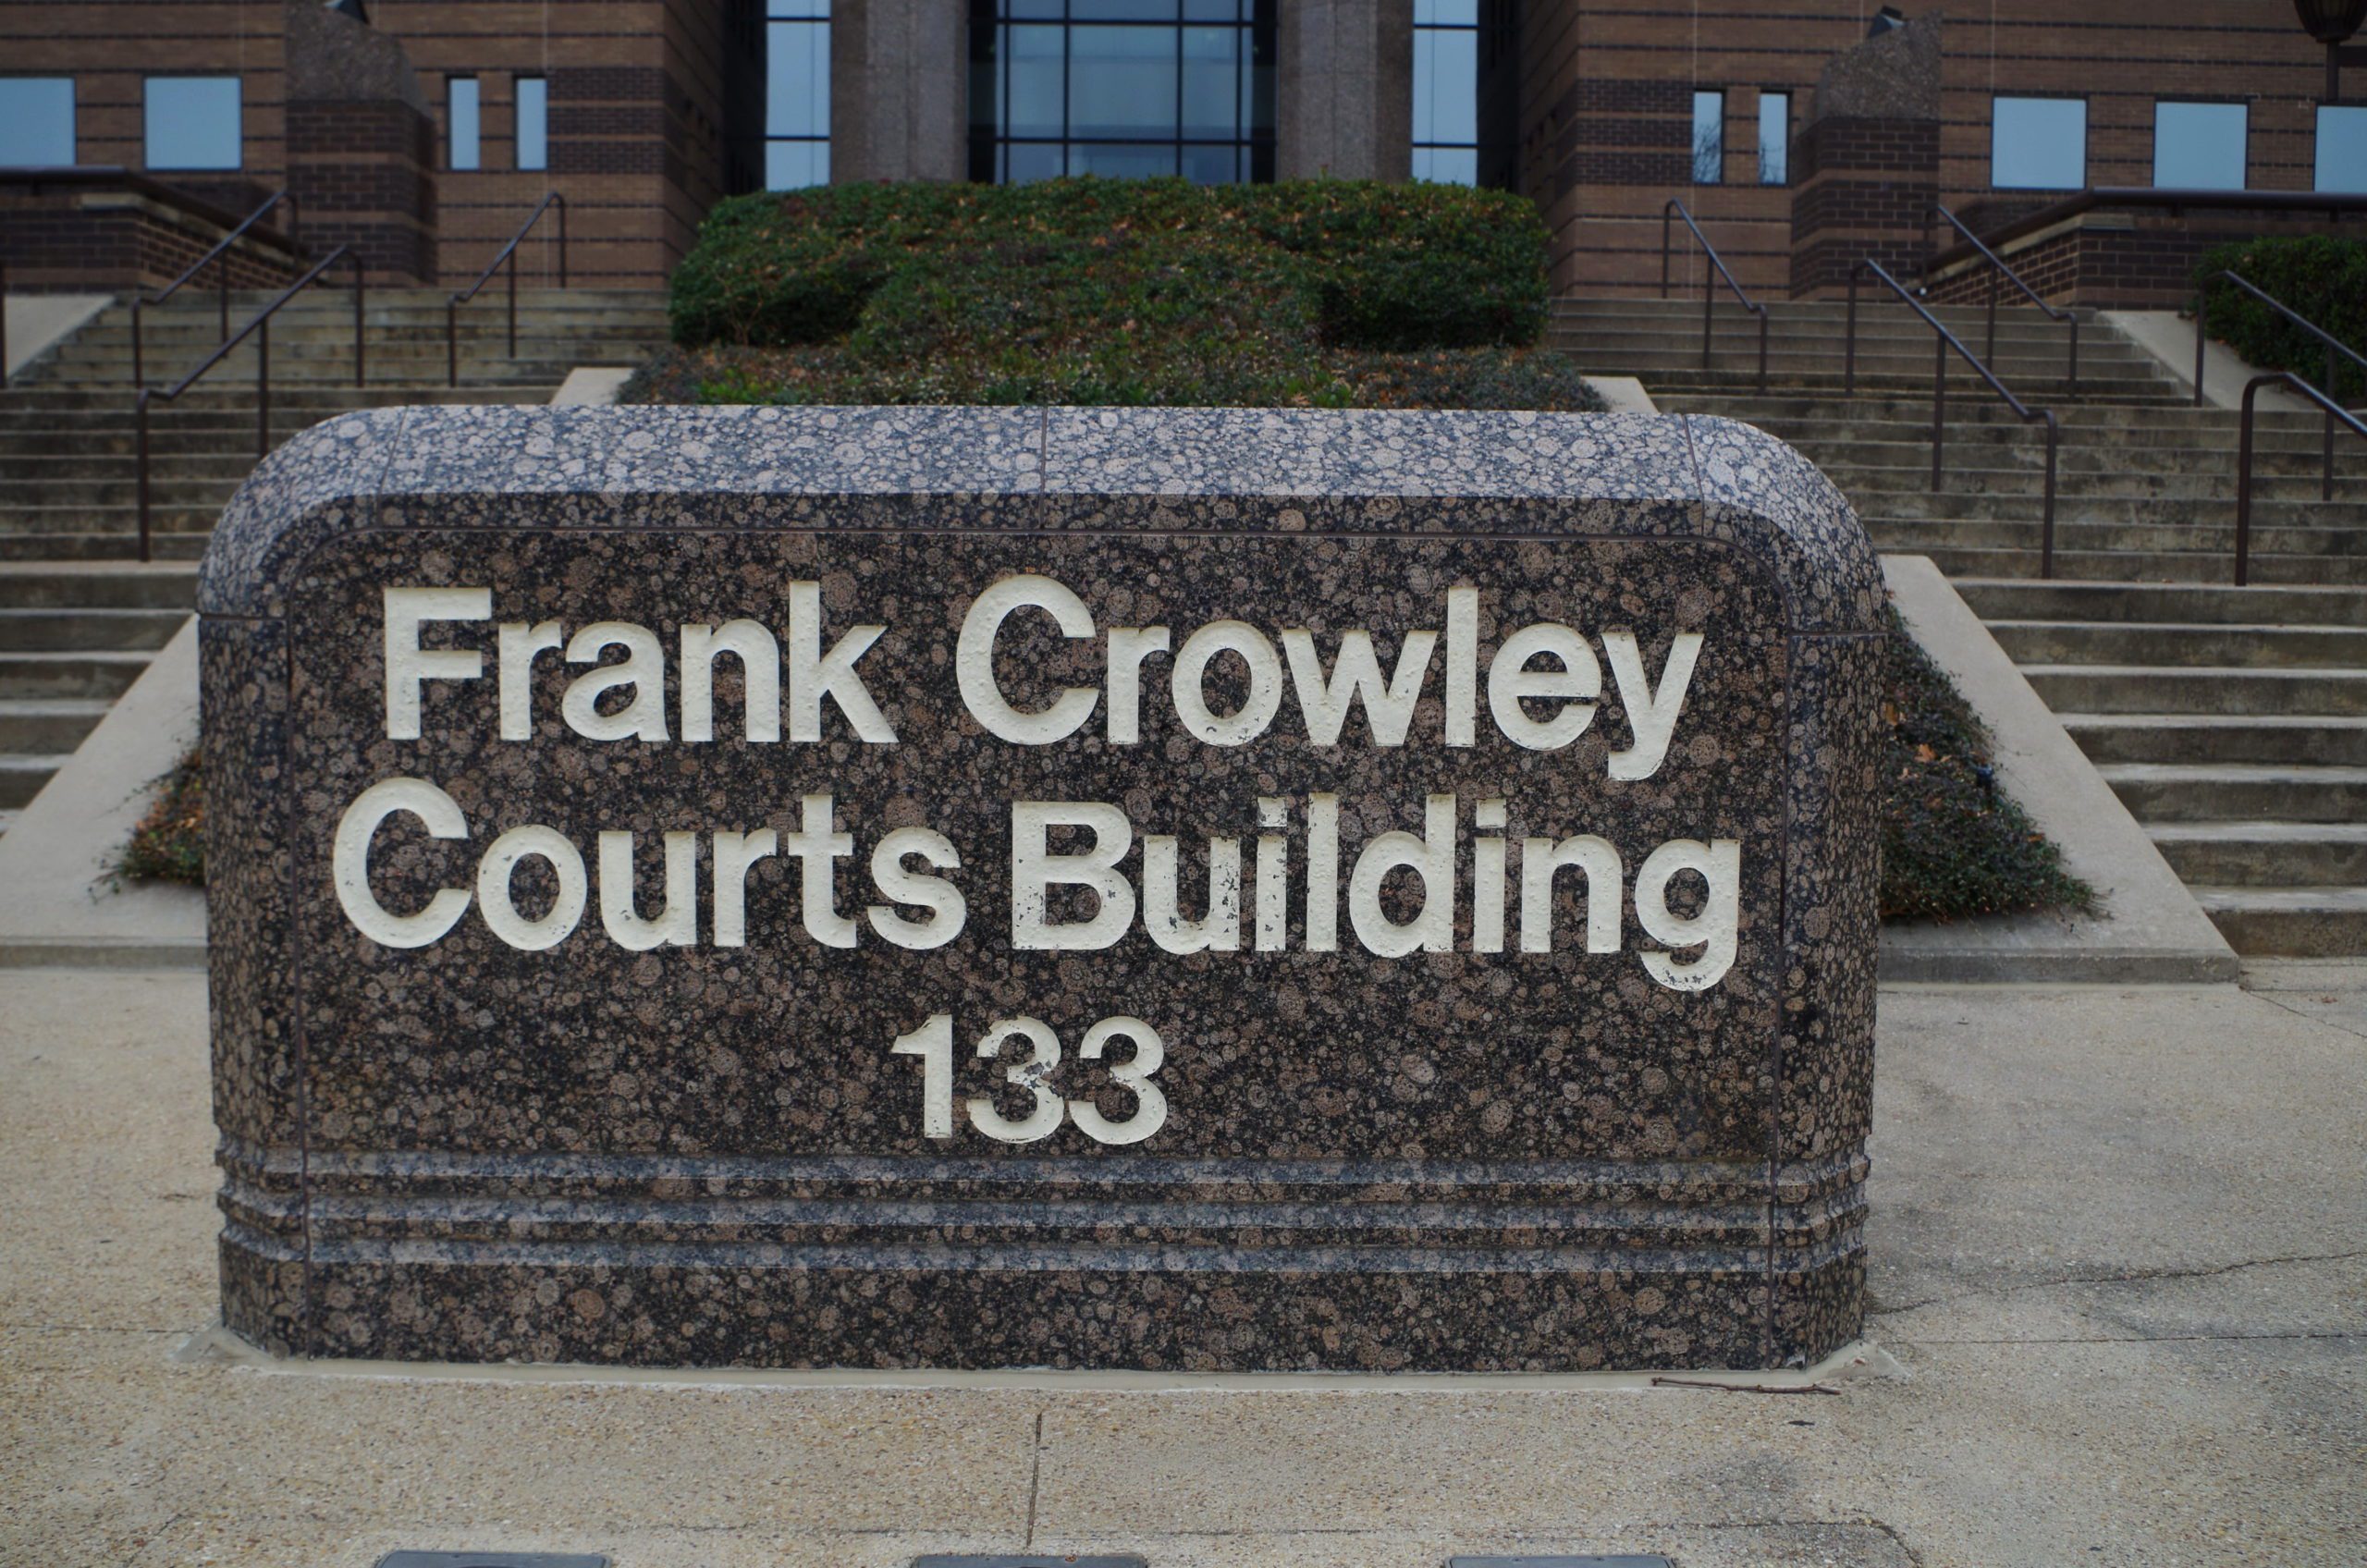 Frank Crowley Courts Building